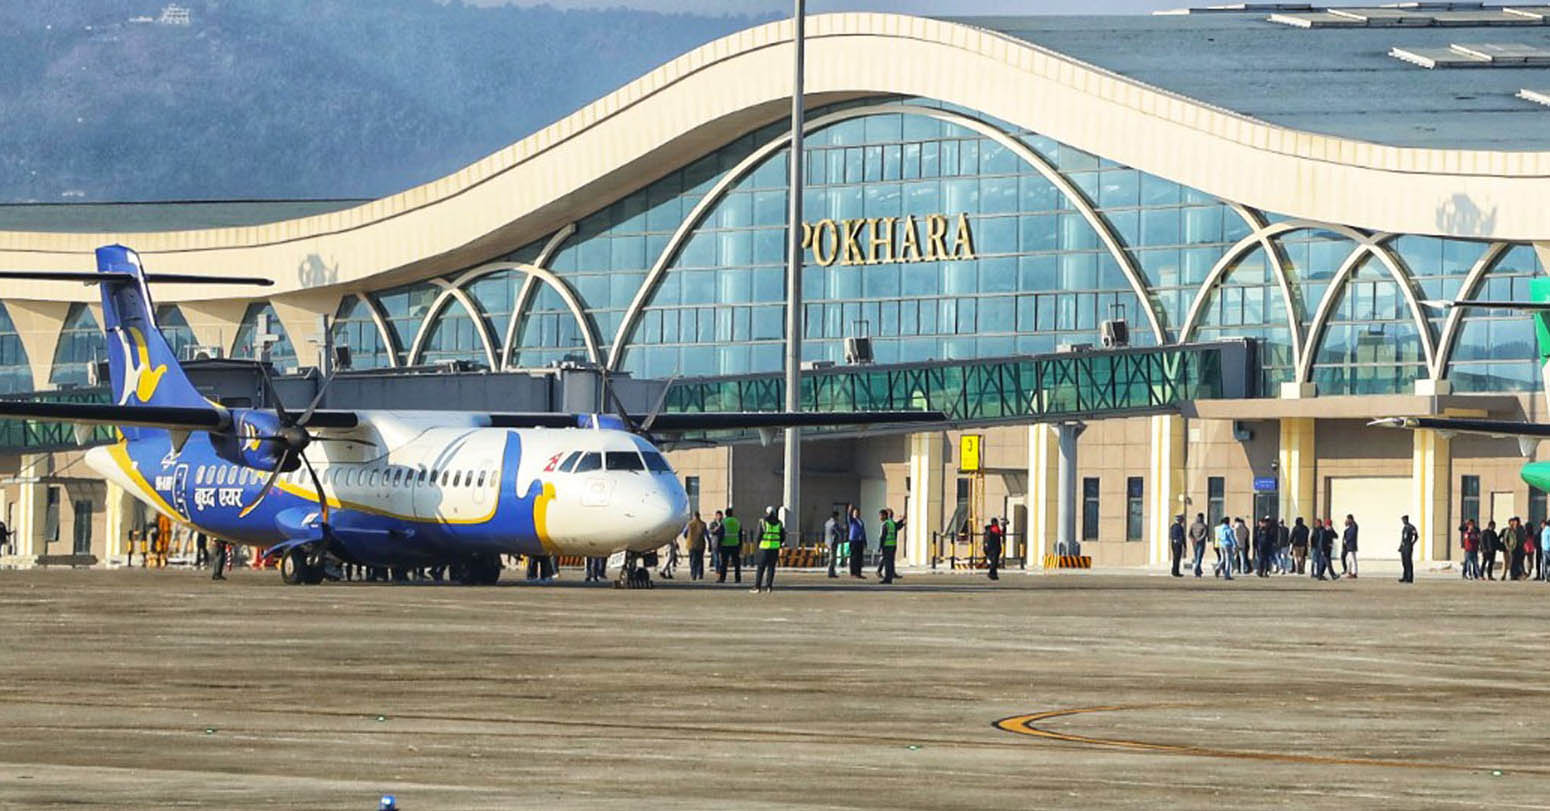 Pokhara International Airport - Aviation in Nepal (Internet Photo)